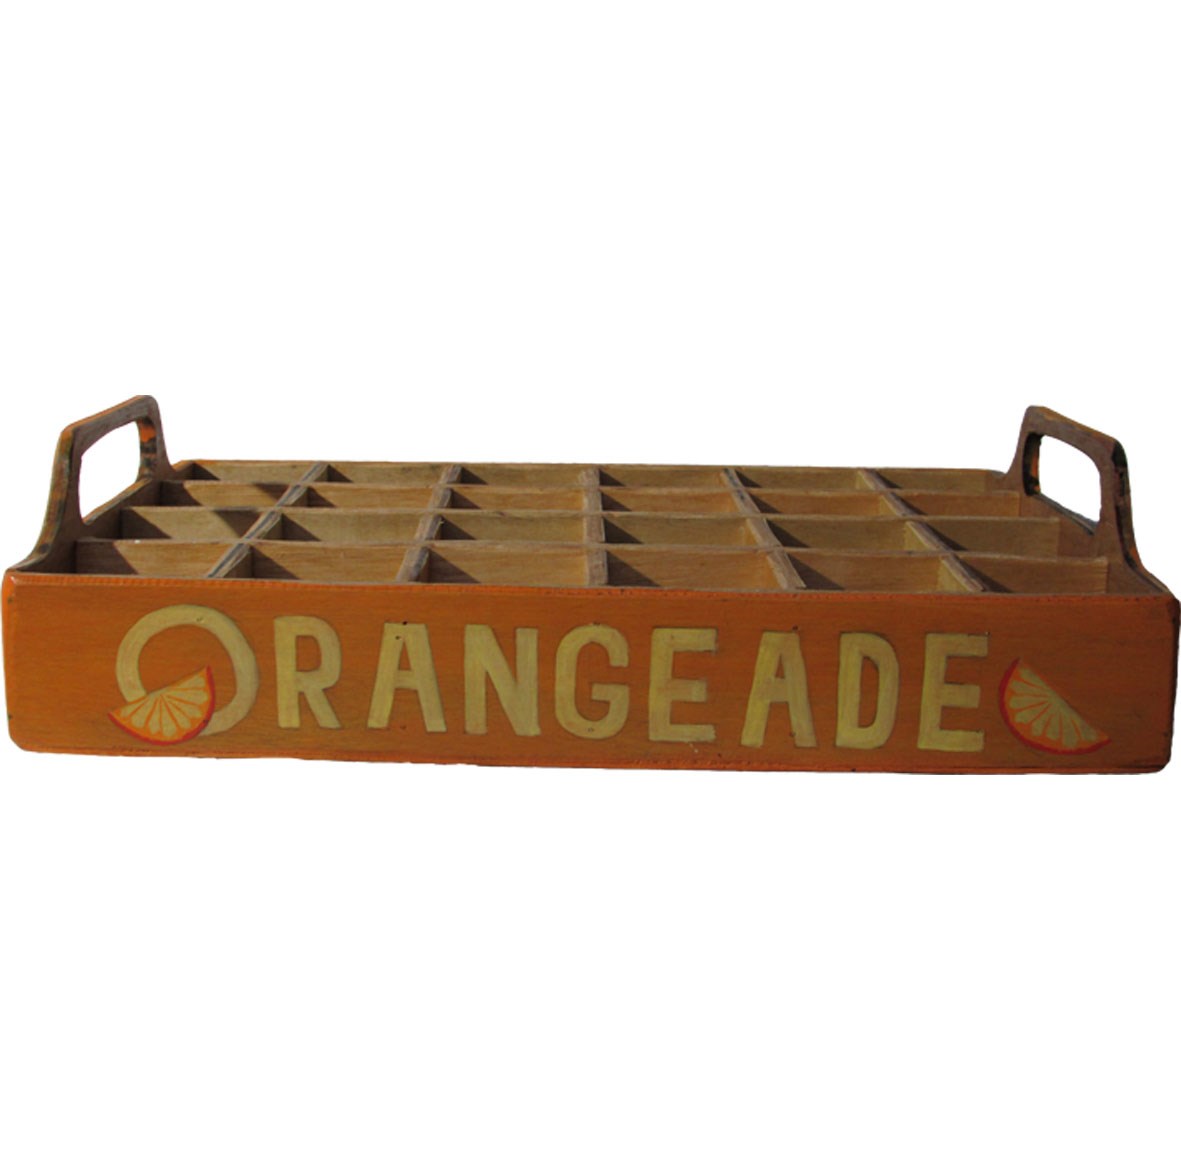 Orangeade Bottle Case with handles